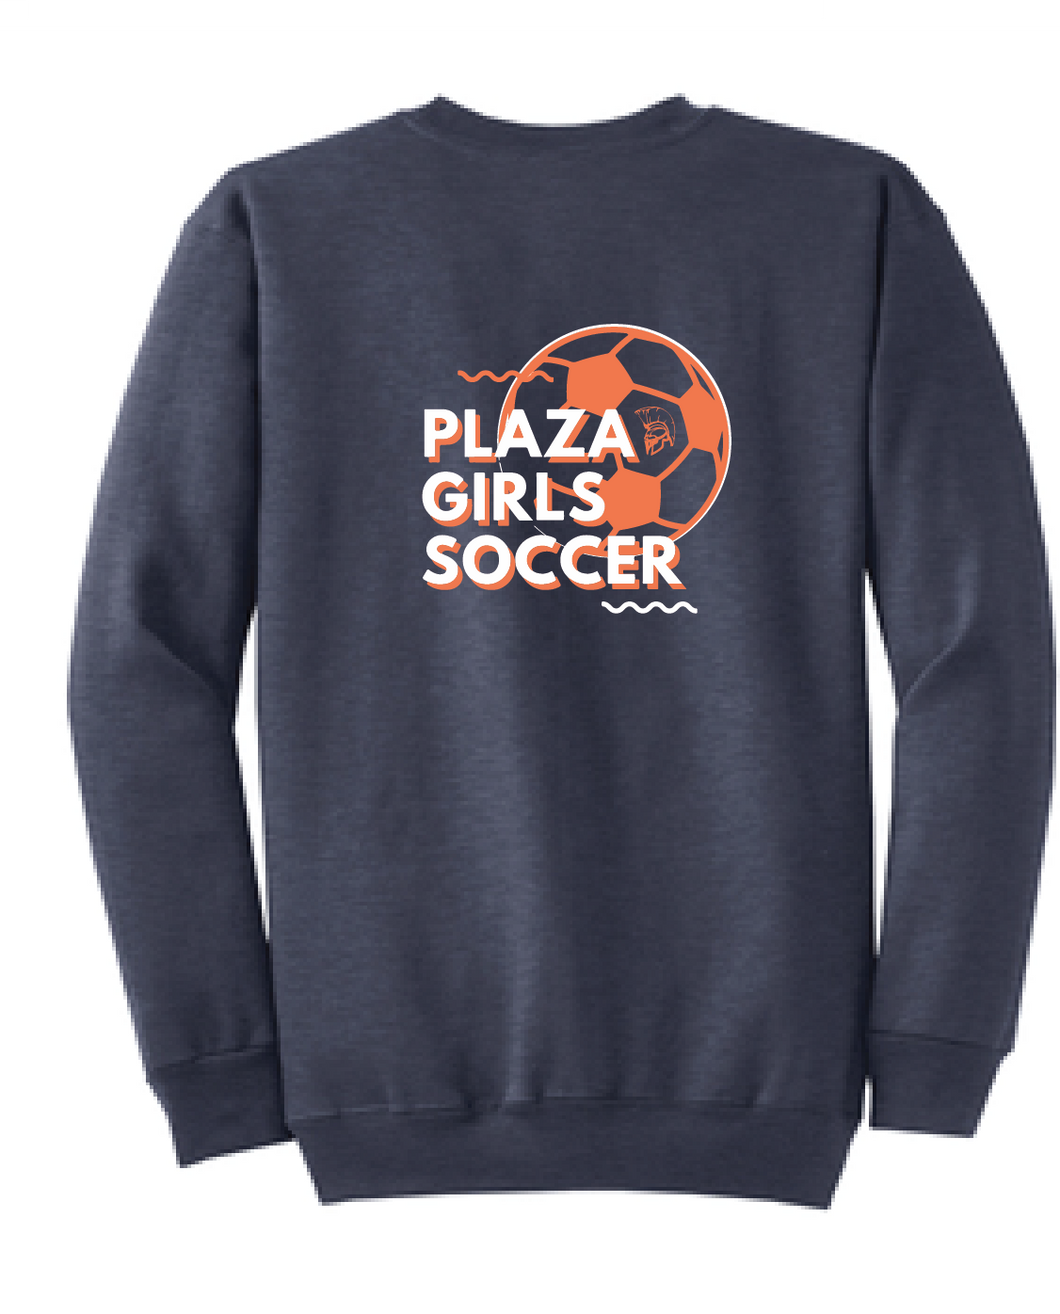 Crew neck Sweatshirt / Navy / Plaza Girls Soccer